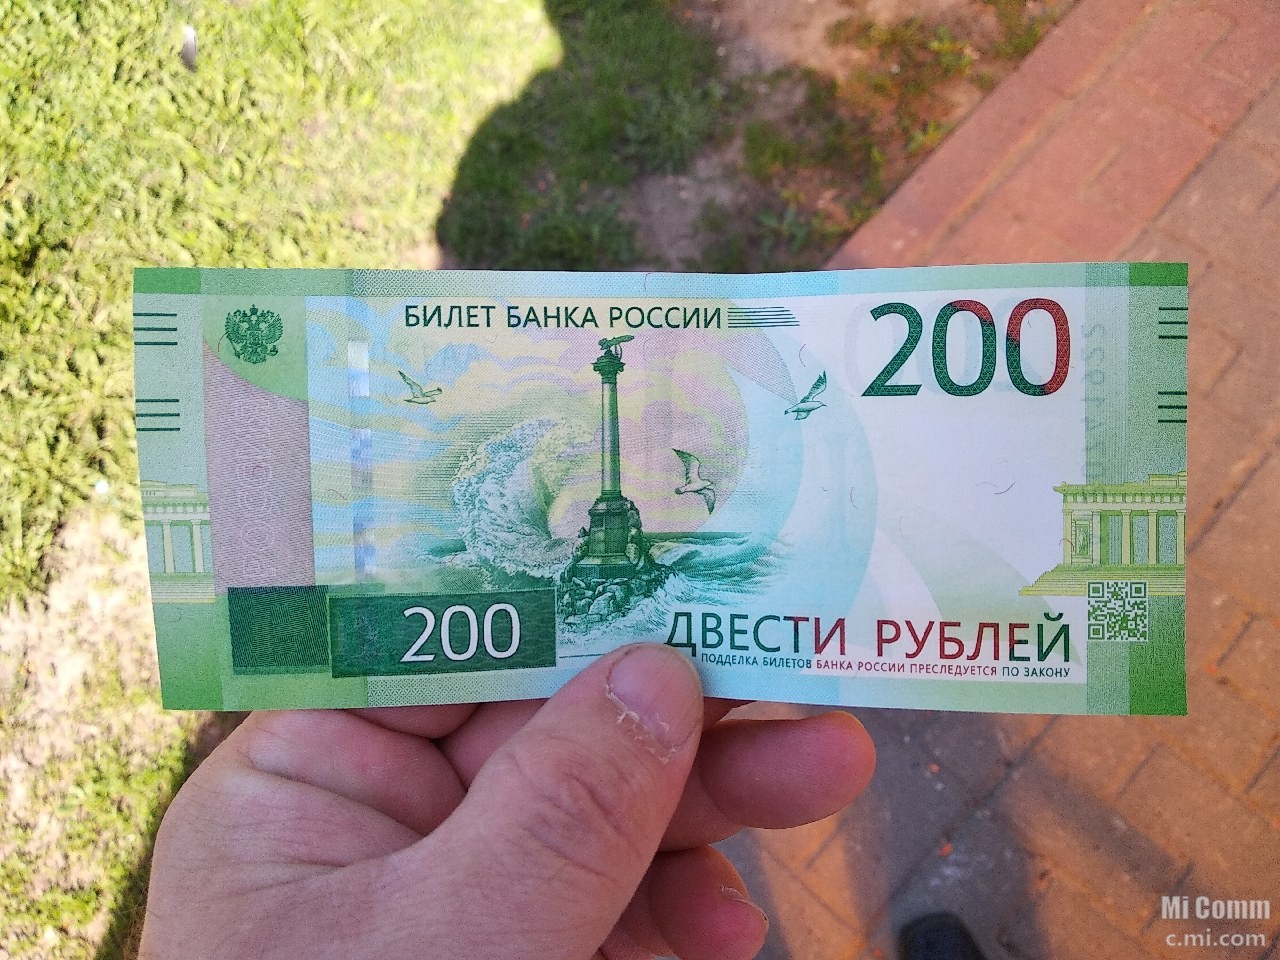 200 купюра фото. 200 Рублей. Купюра 200 рублей. 200 Рублей банкнота.